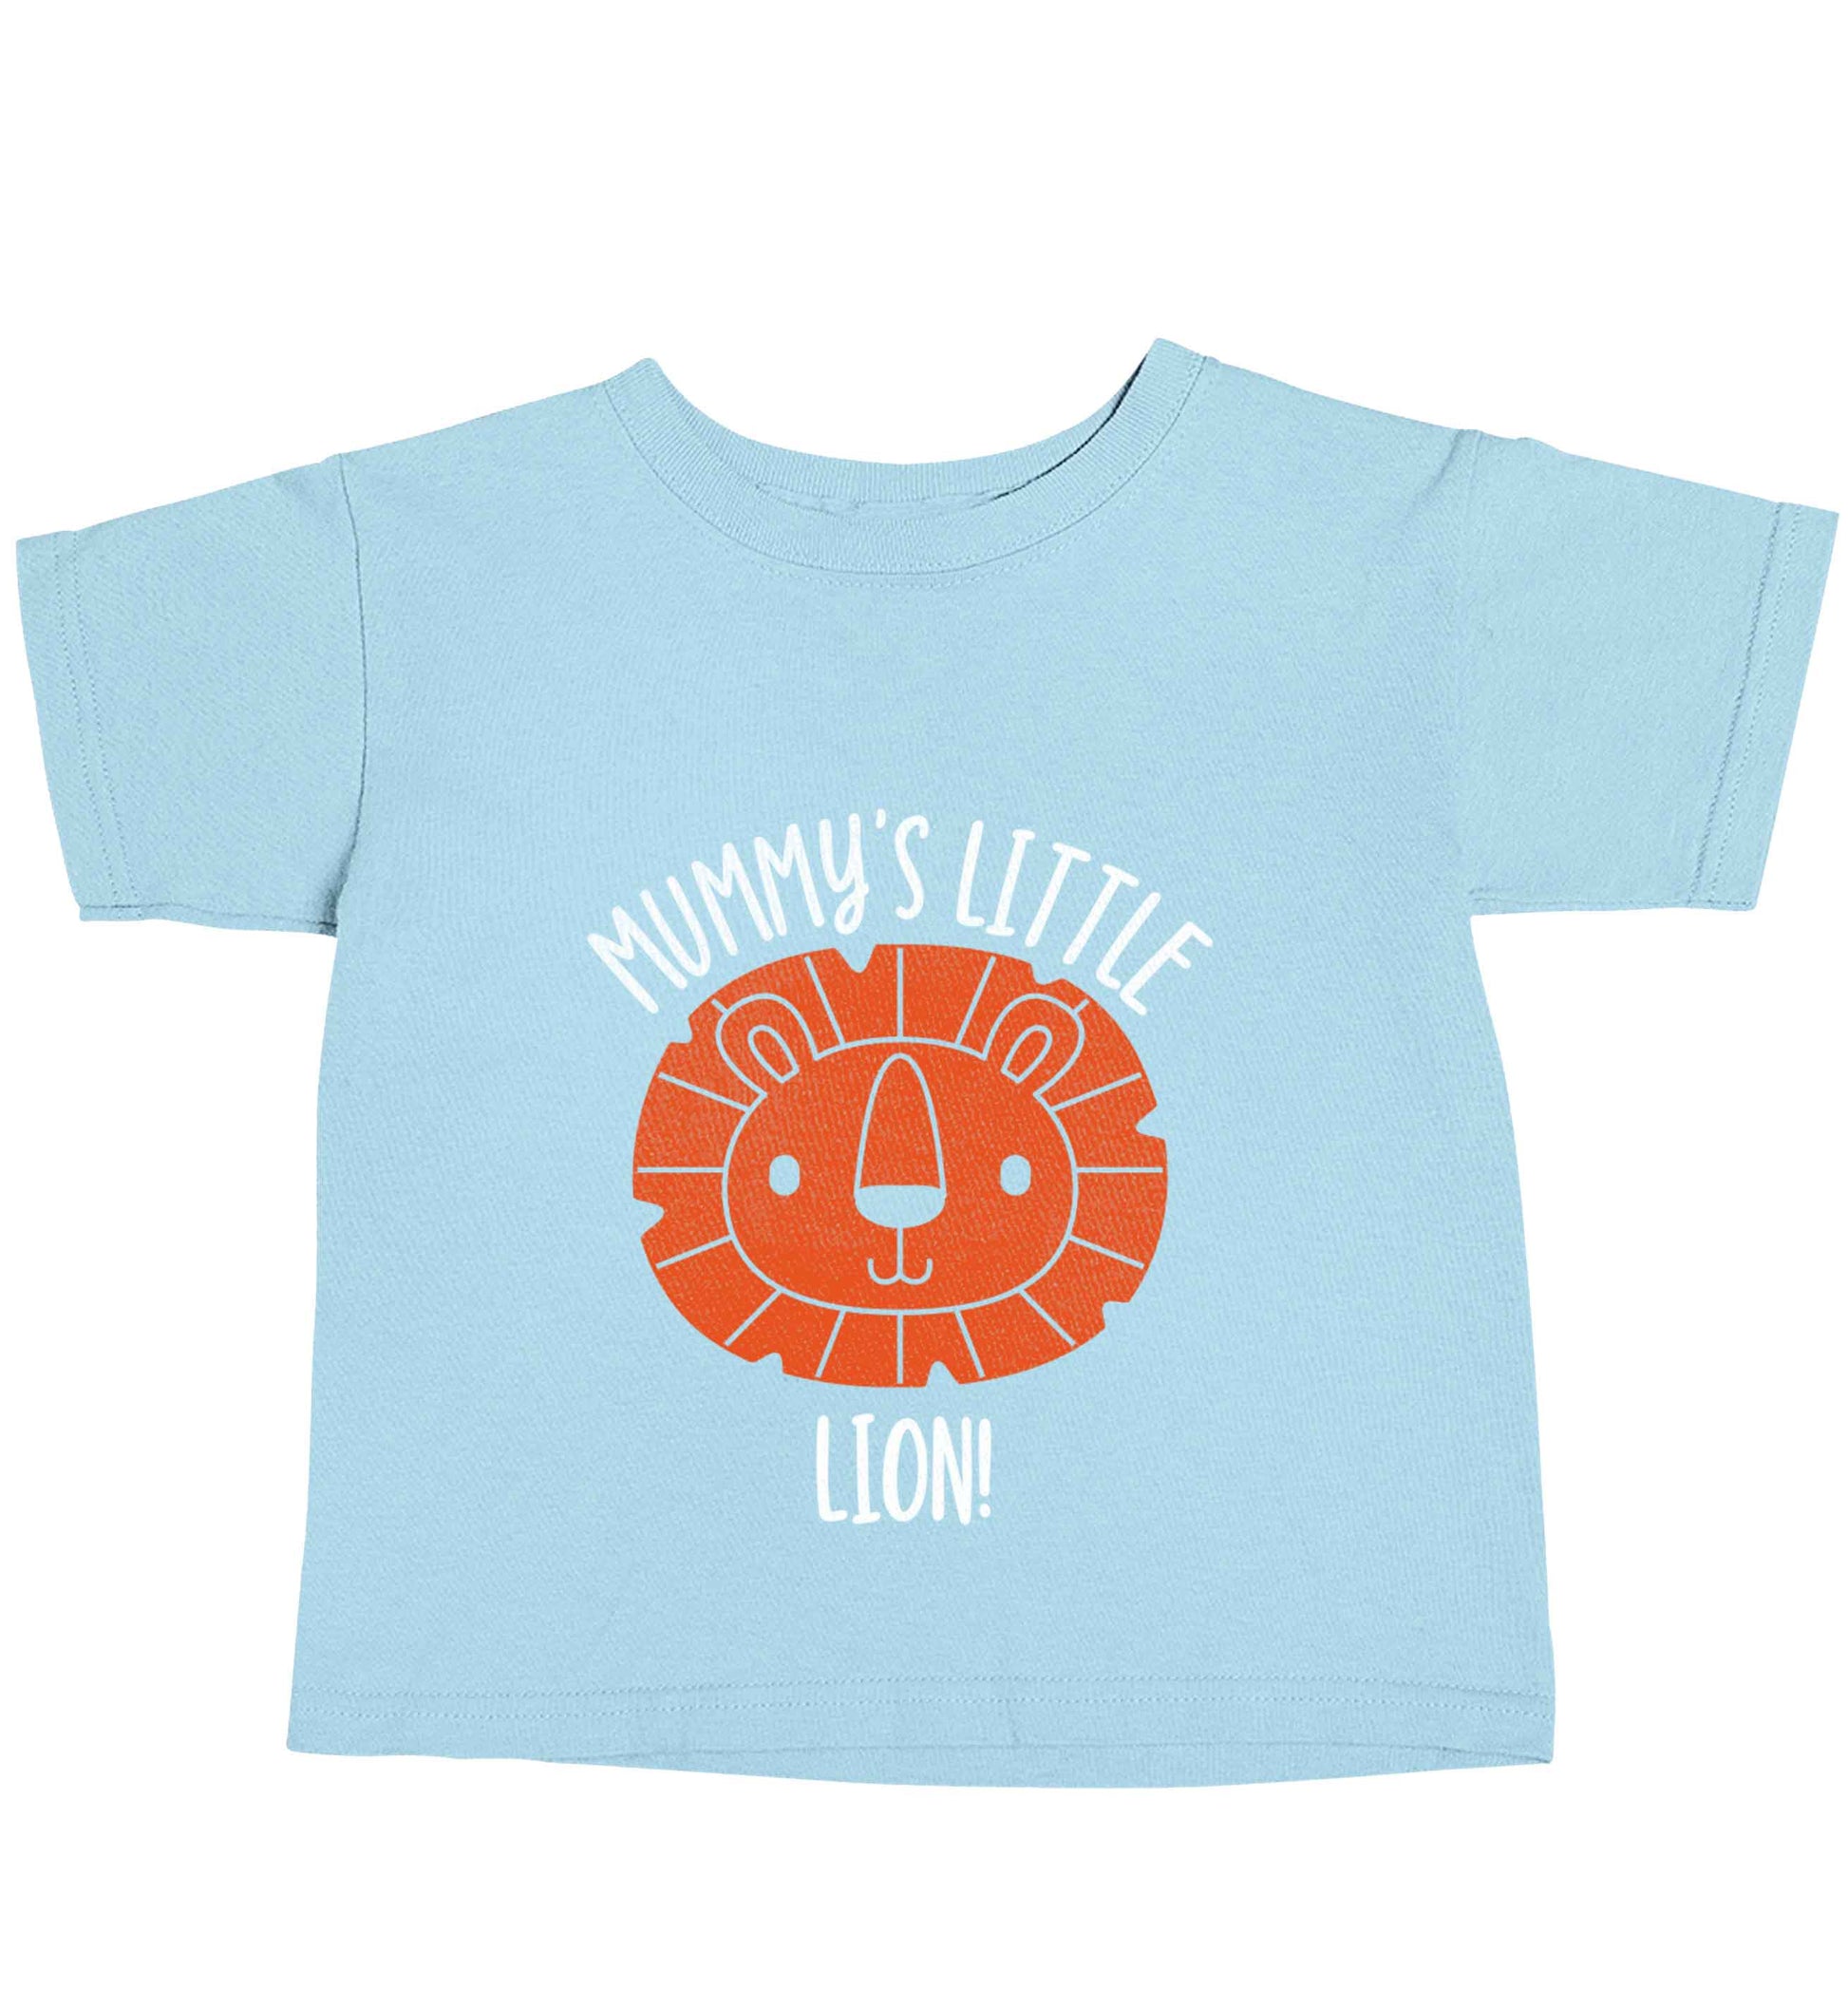 Mummy's little lion light blue baby toddler Tshirt 2 Years